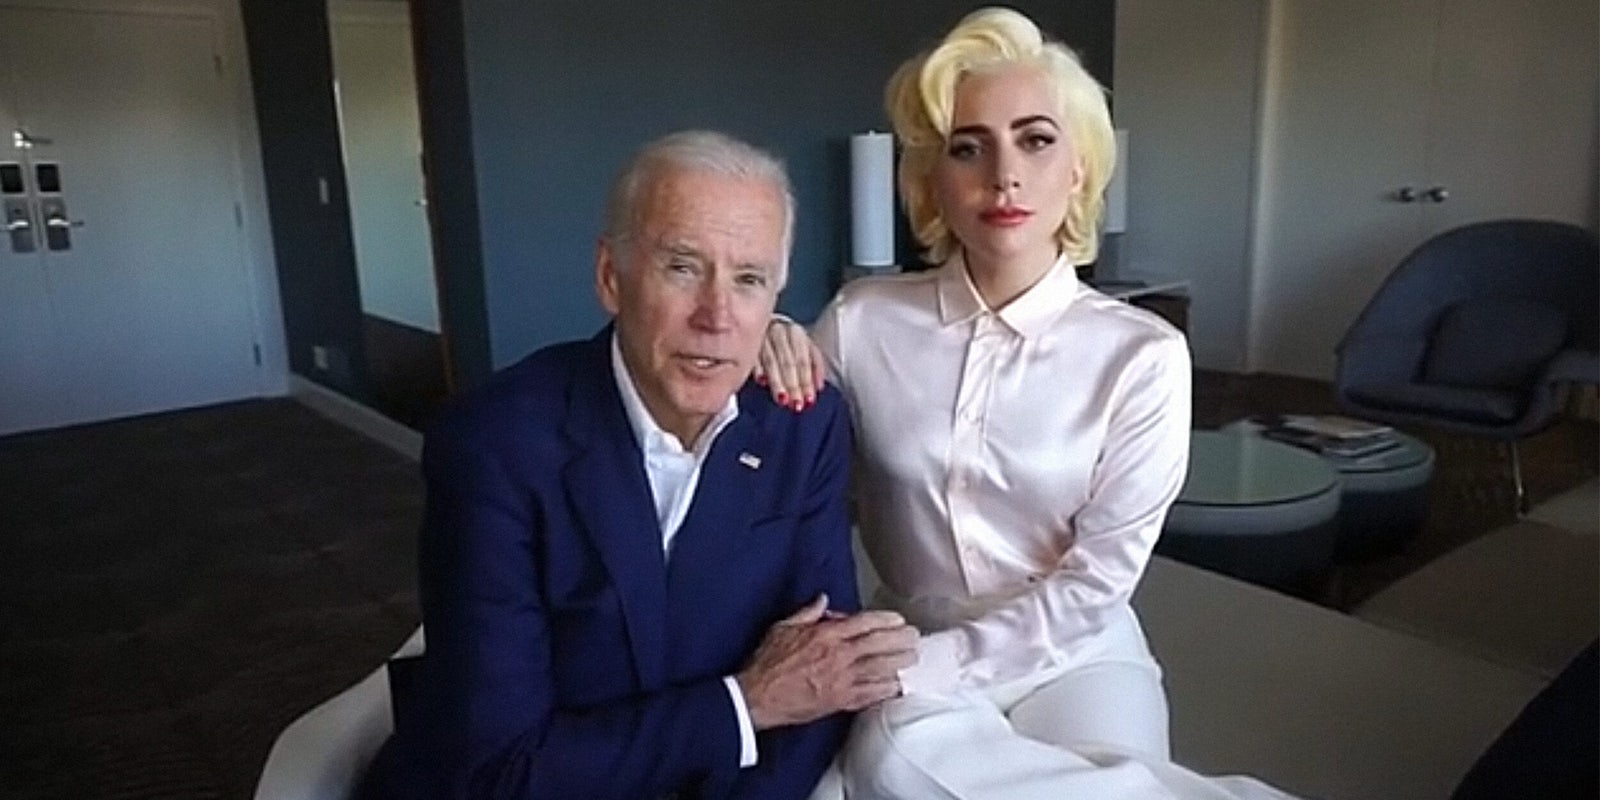 Lady Gaga and Joe Biden #ItsOnUs video